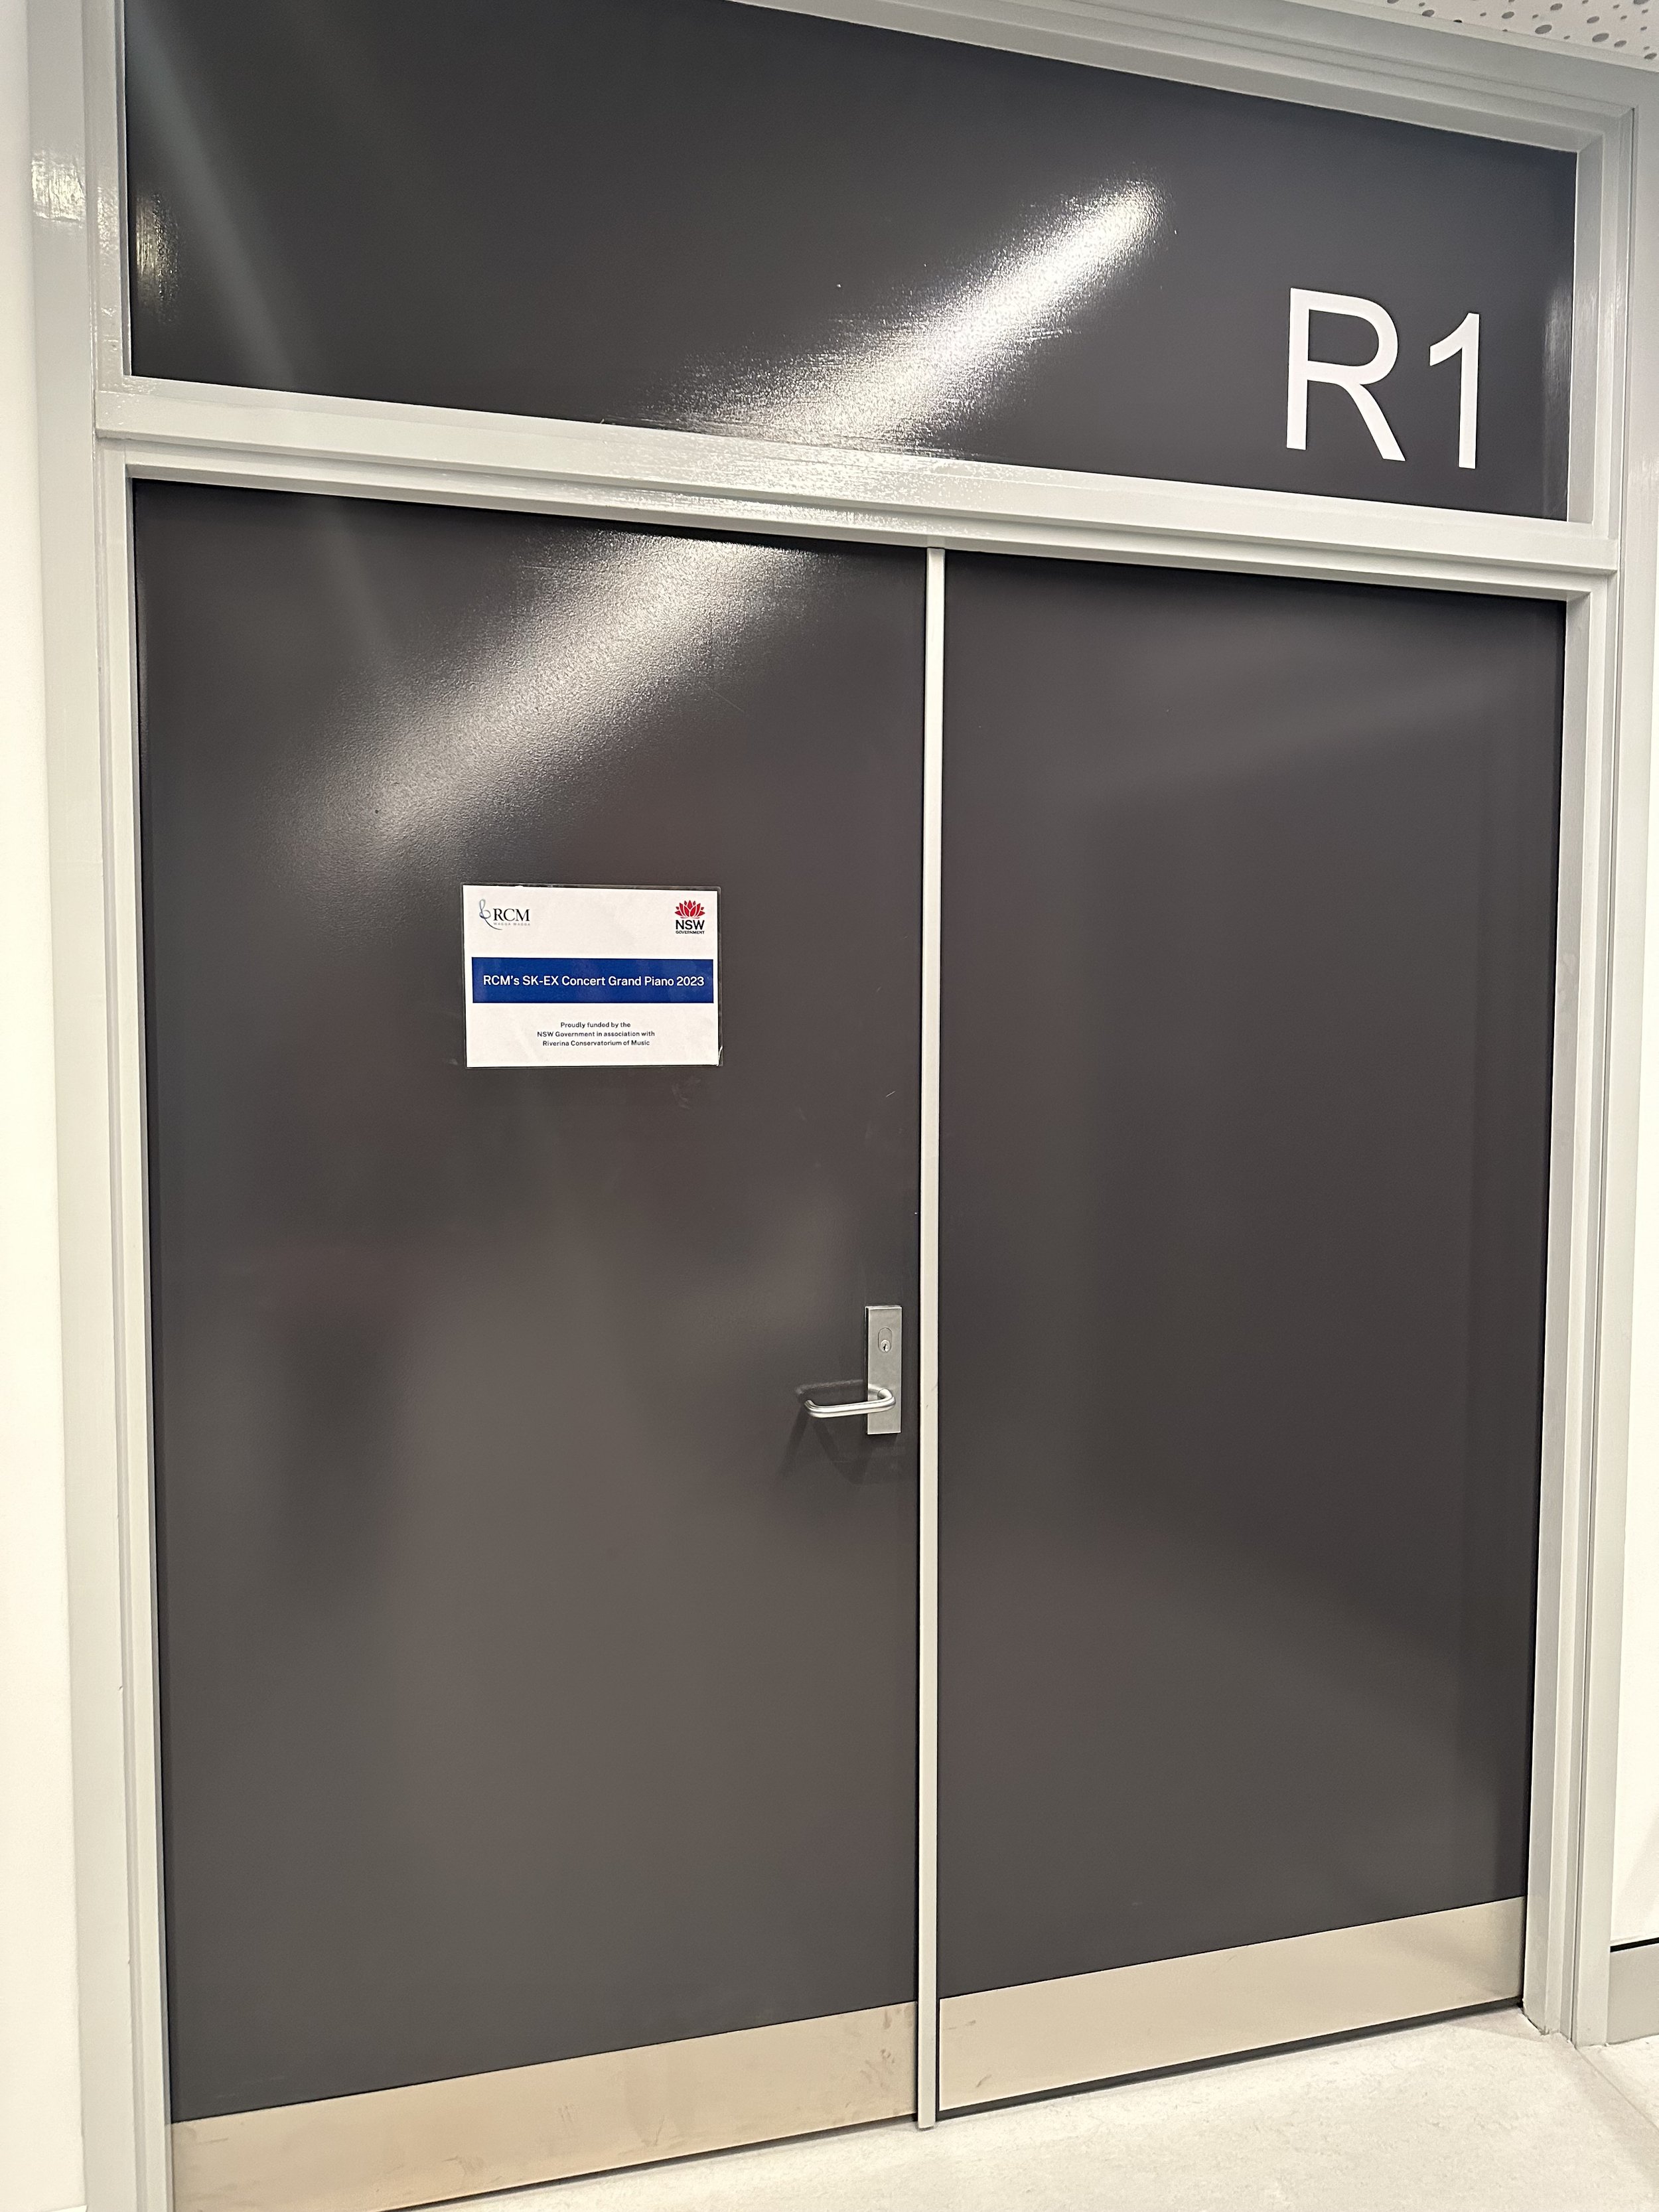 RCM Signage on Main Doors to RCM R1.jpg